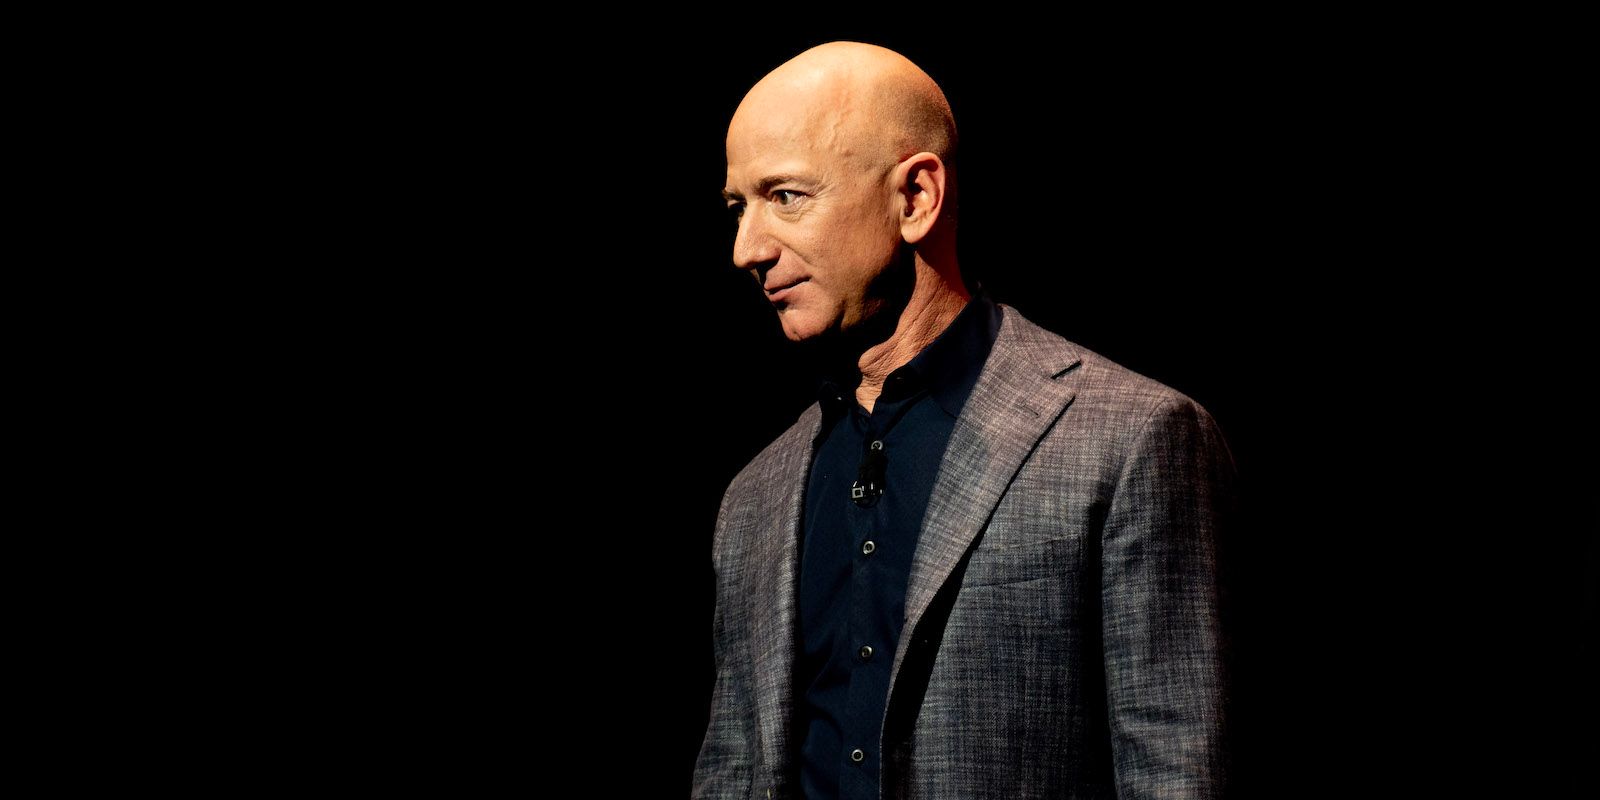 Jeff Bezos on Dark Stage With Dim Lighting